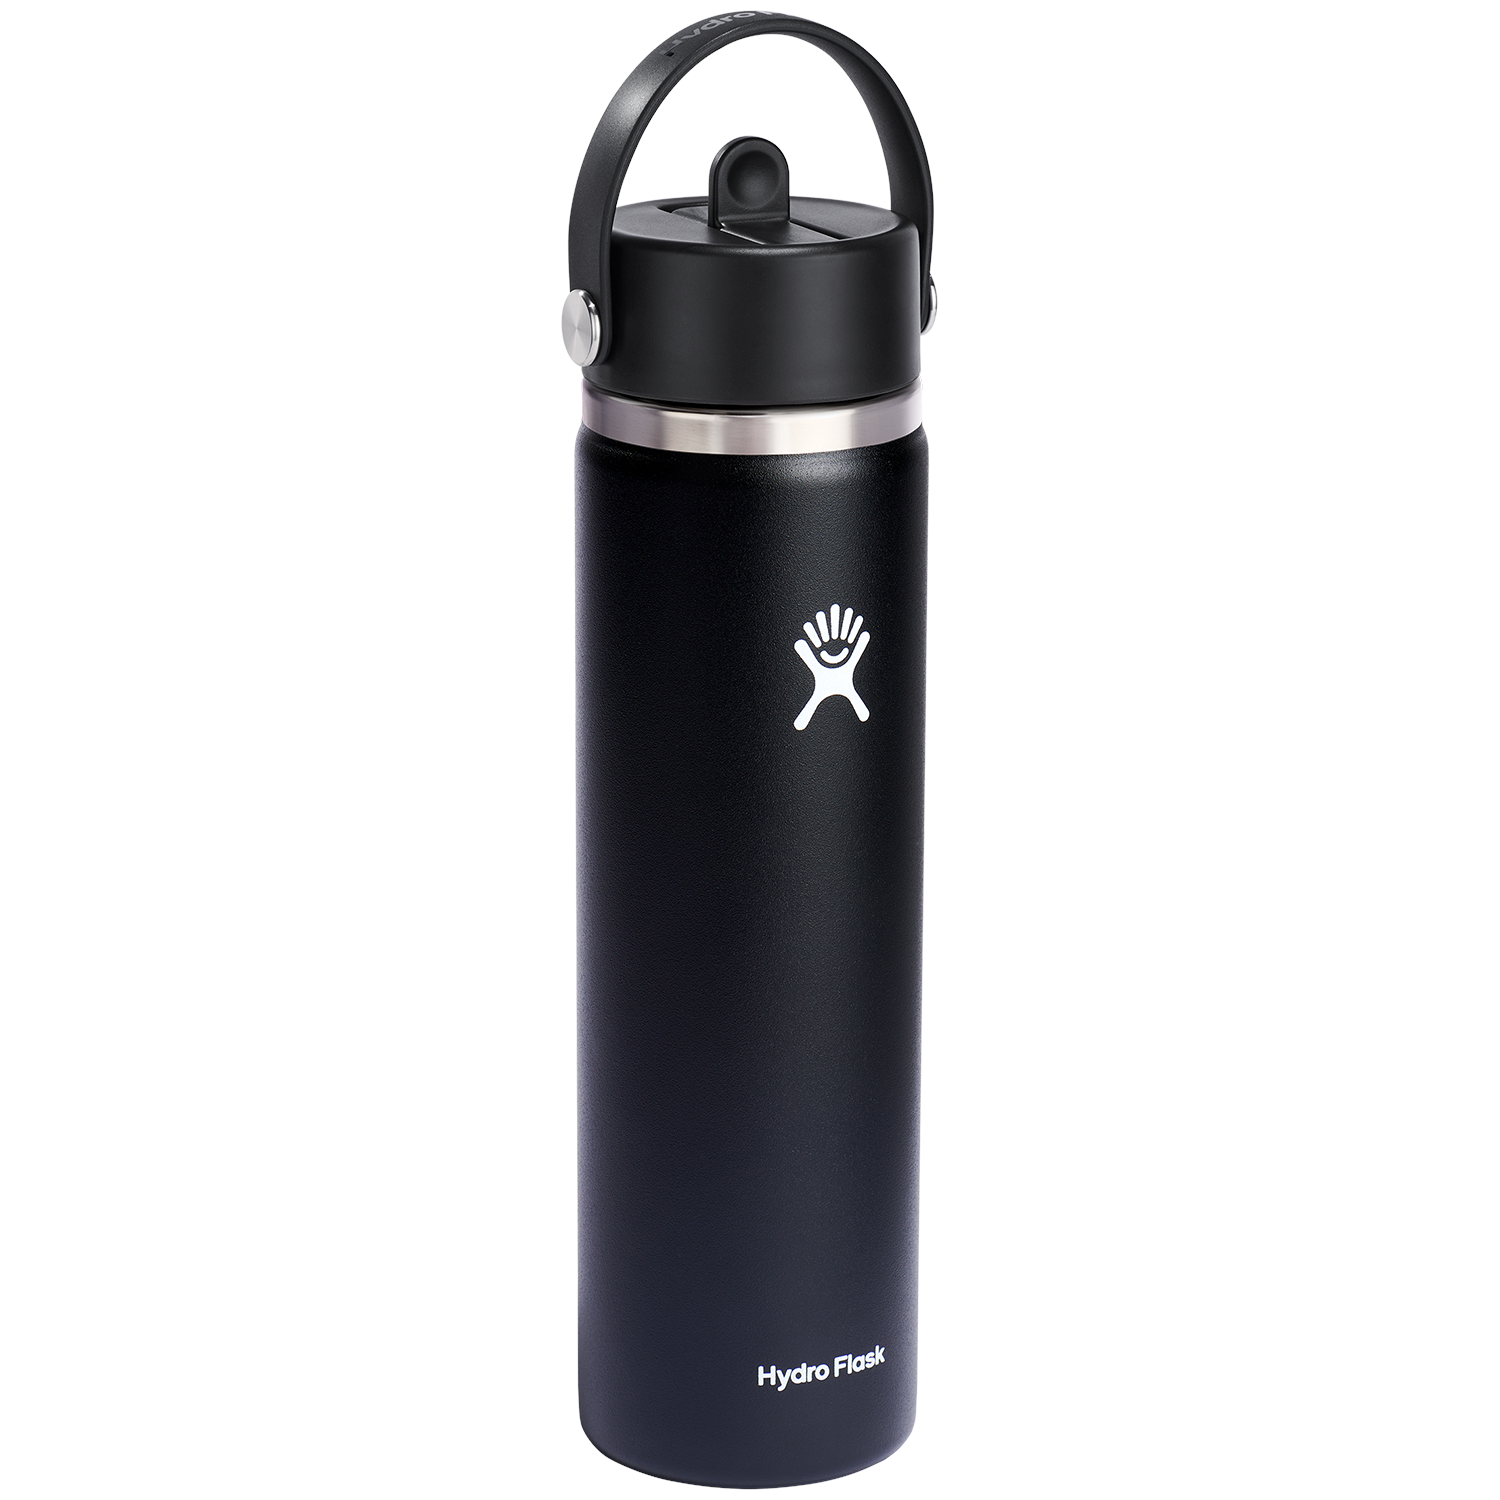 Hydro Flask 24 oz. Wide Mouth Bottle with Flex Straw Cap, Black